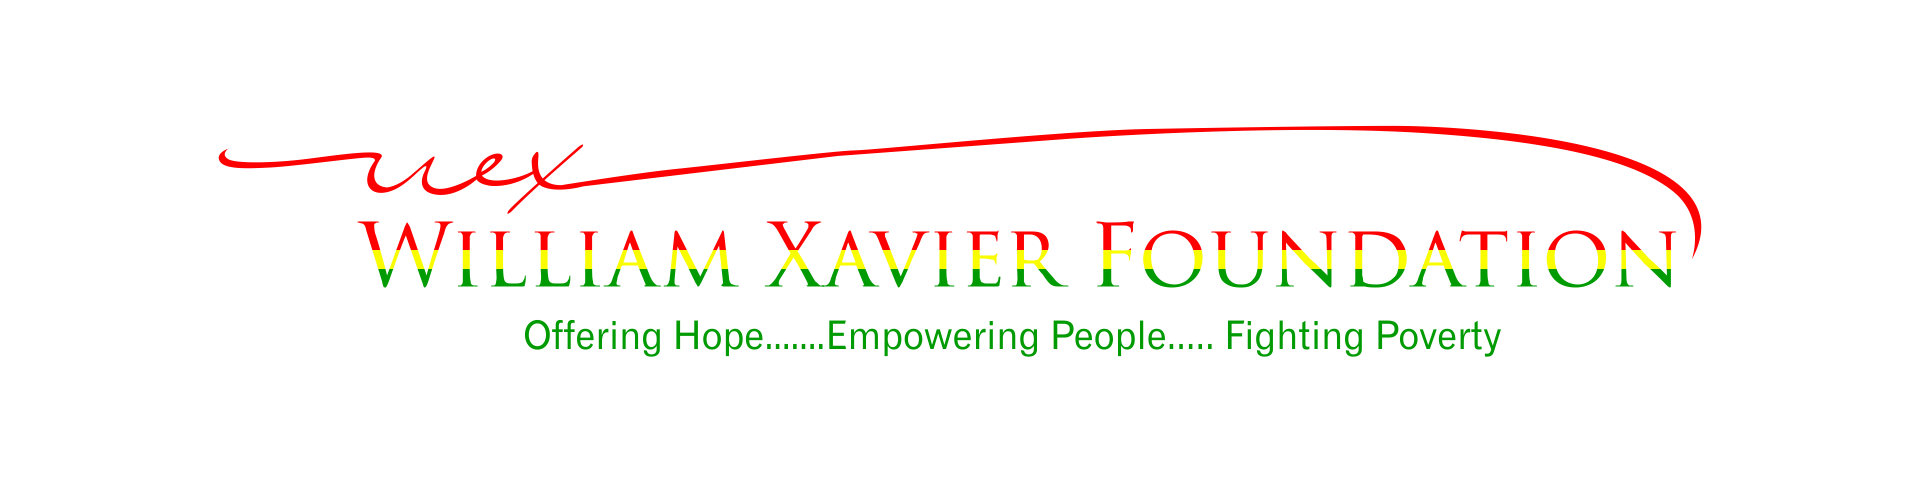 William Xavier Foundation